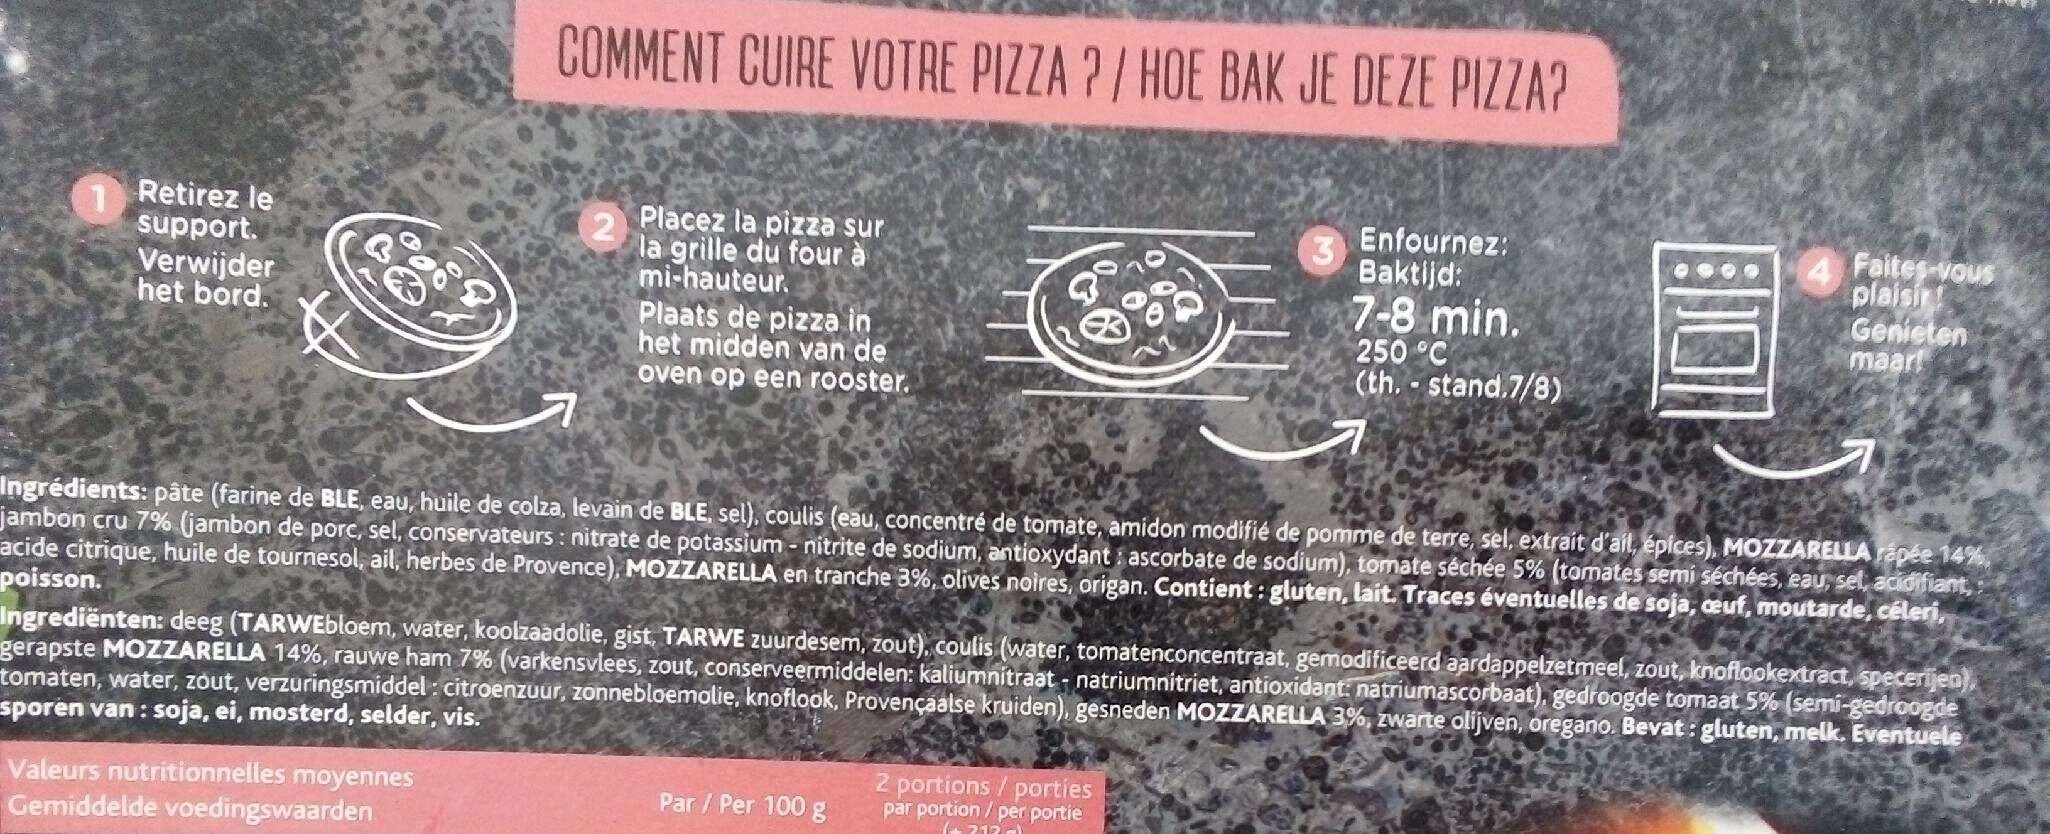 Pizza jambon cru - Ingrédients